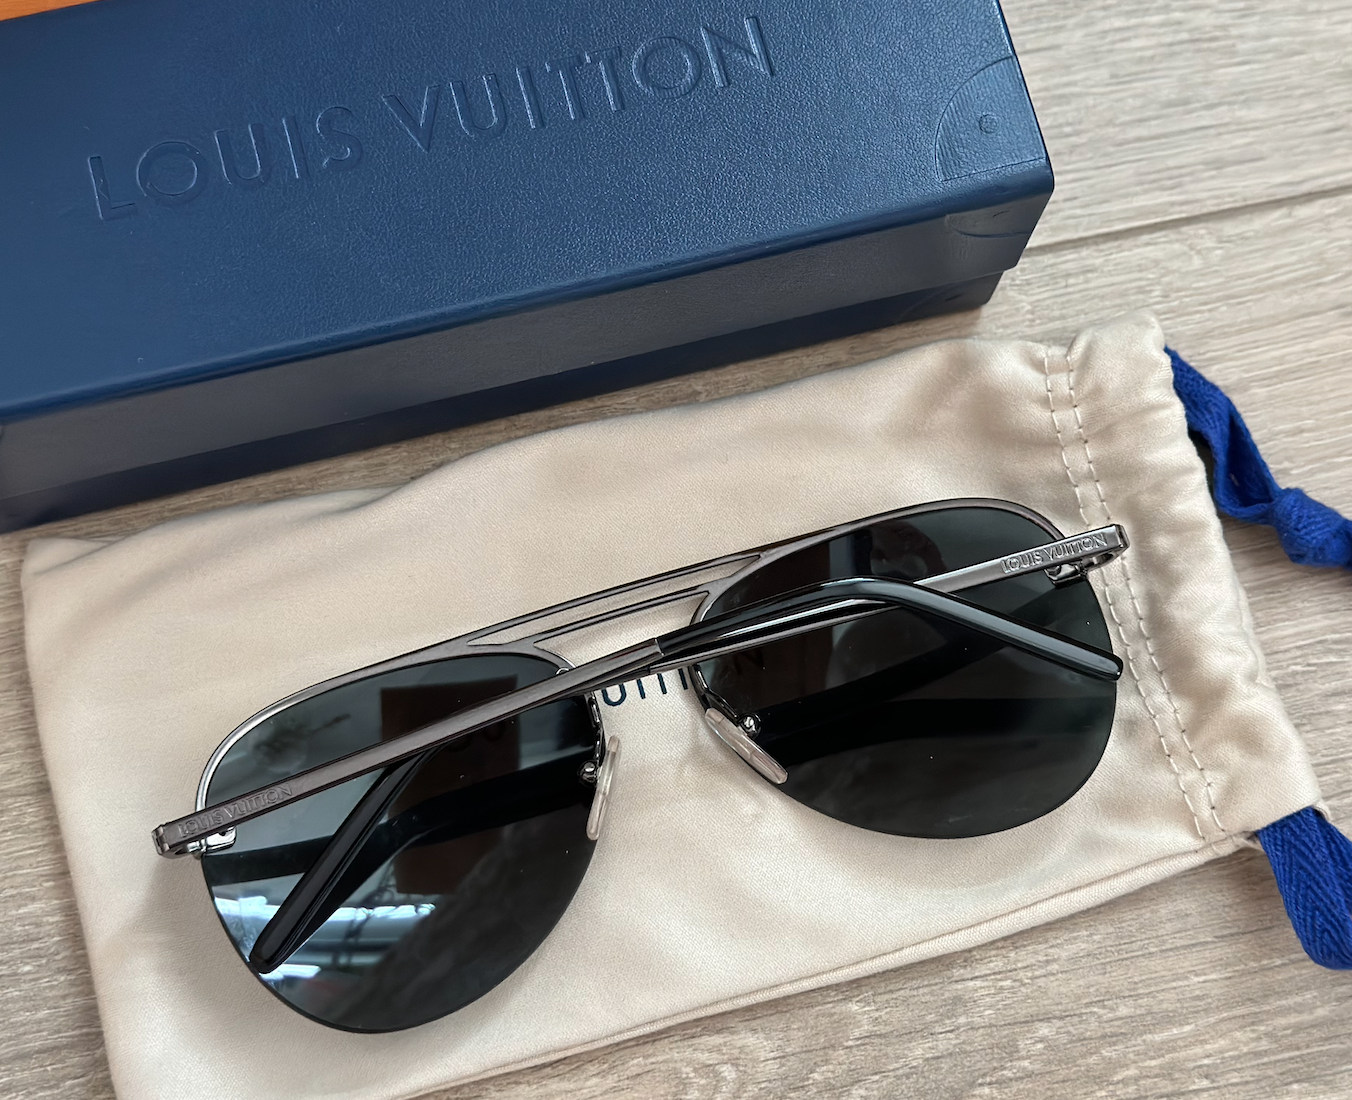 Louis Vuitton, Accessories, Louis Vuitton Monogram Clockwise Sunglasses  Z19e Dark Gun